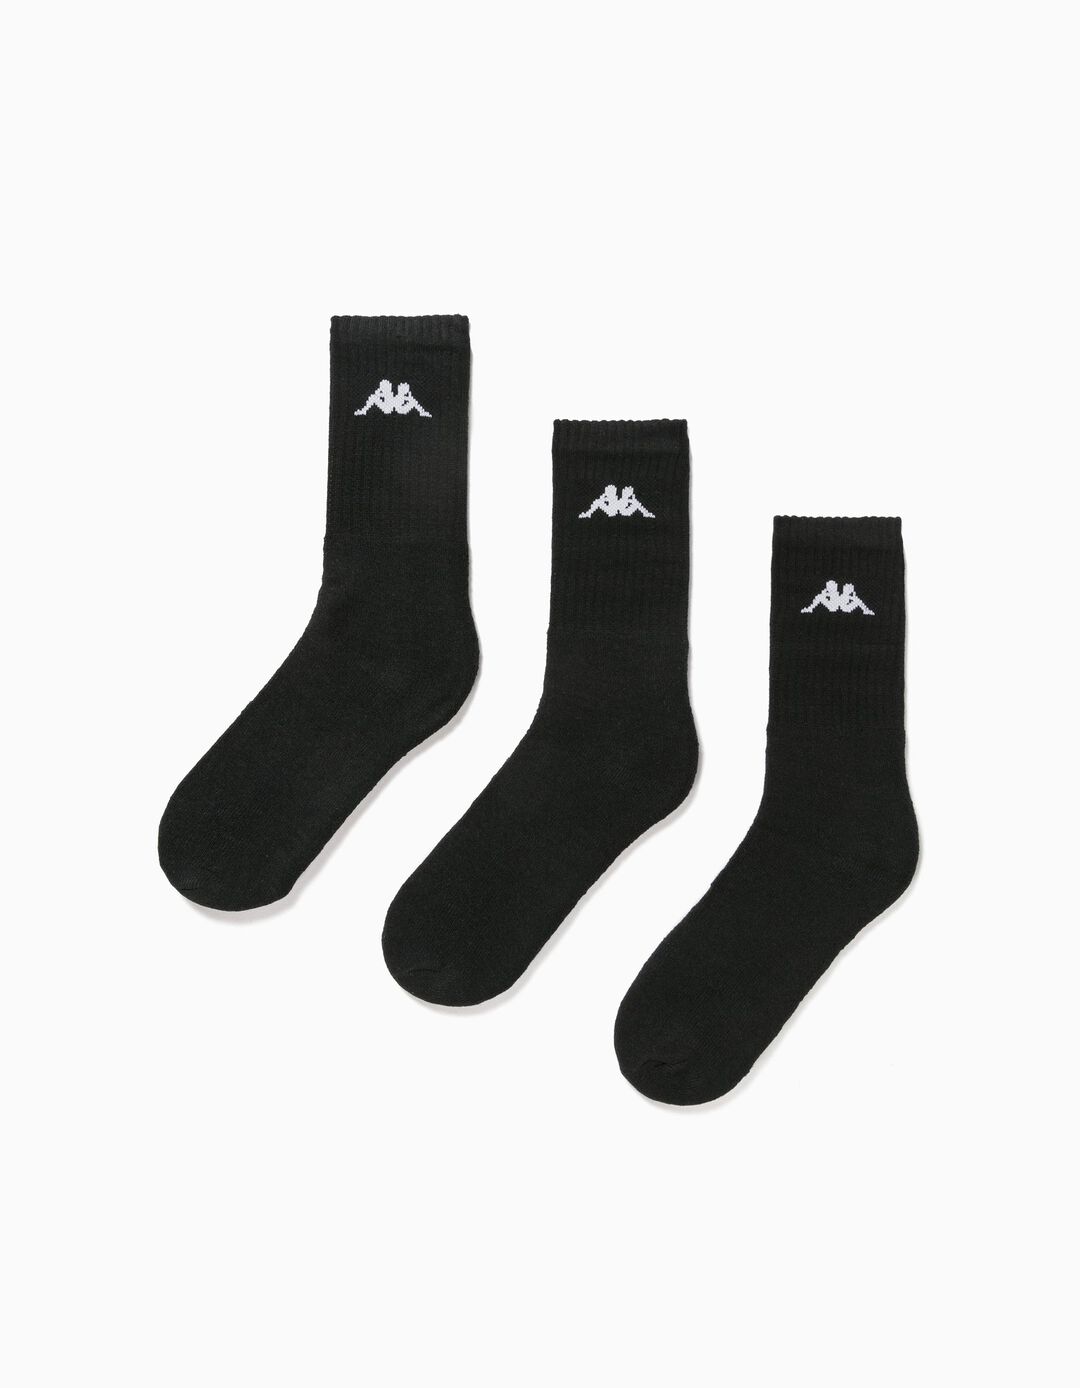 3 Pairs of 'Kappa' Socks